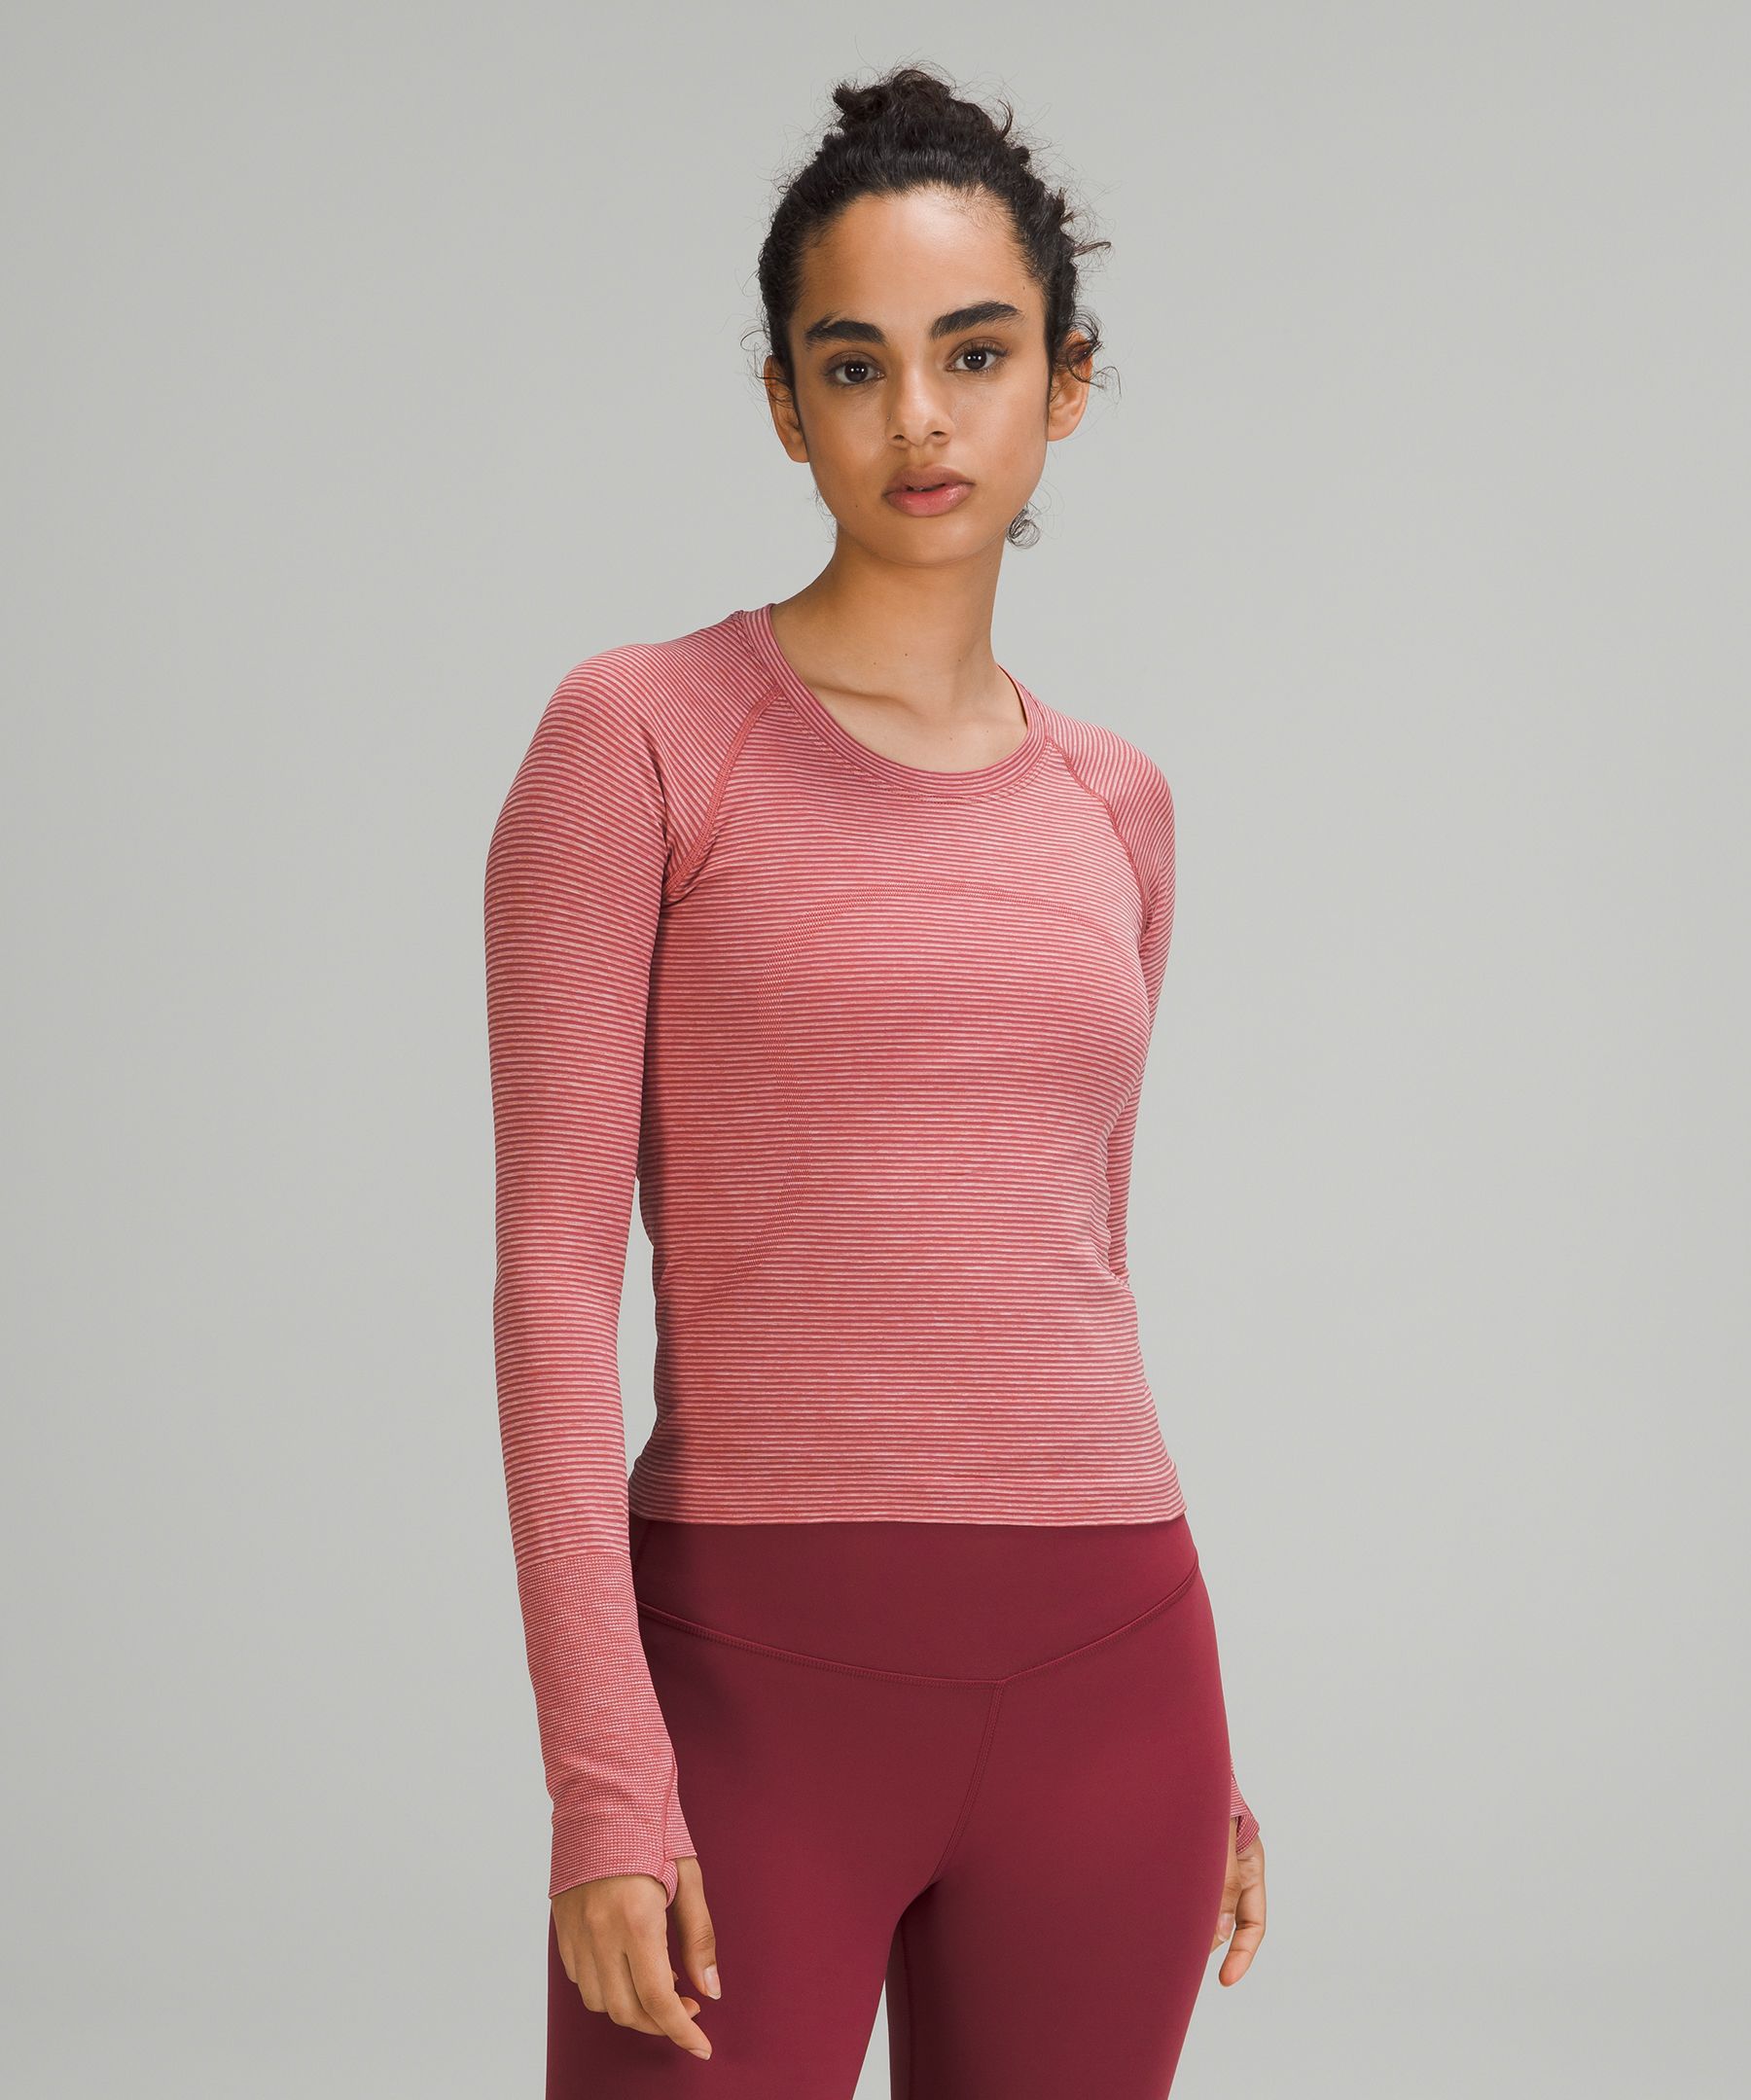 Lululemon Swiftly Tech Long Sleeve Shirt 2.0 Race Length In Pink